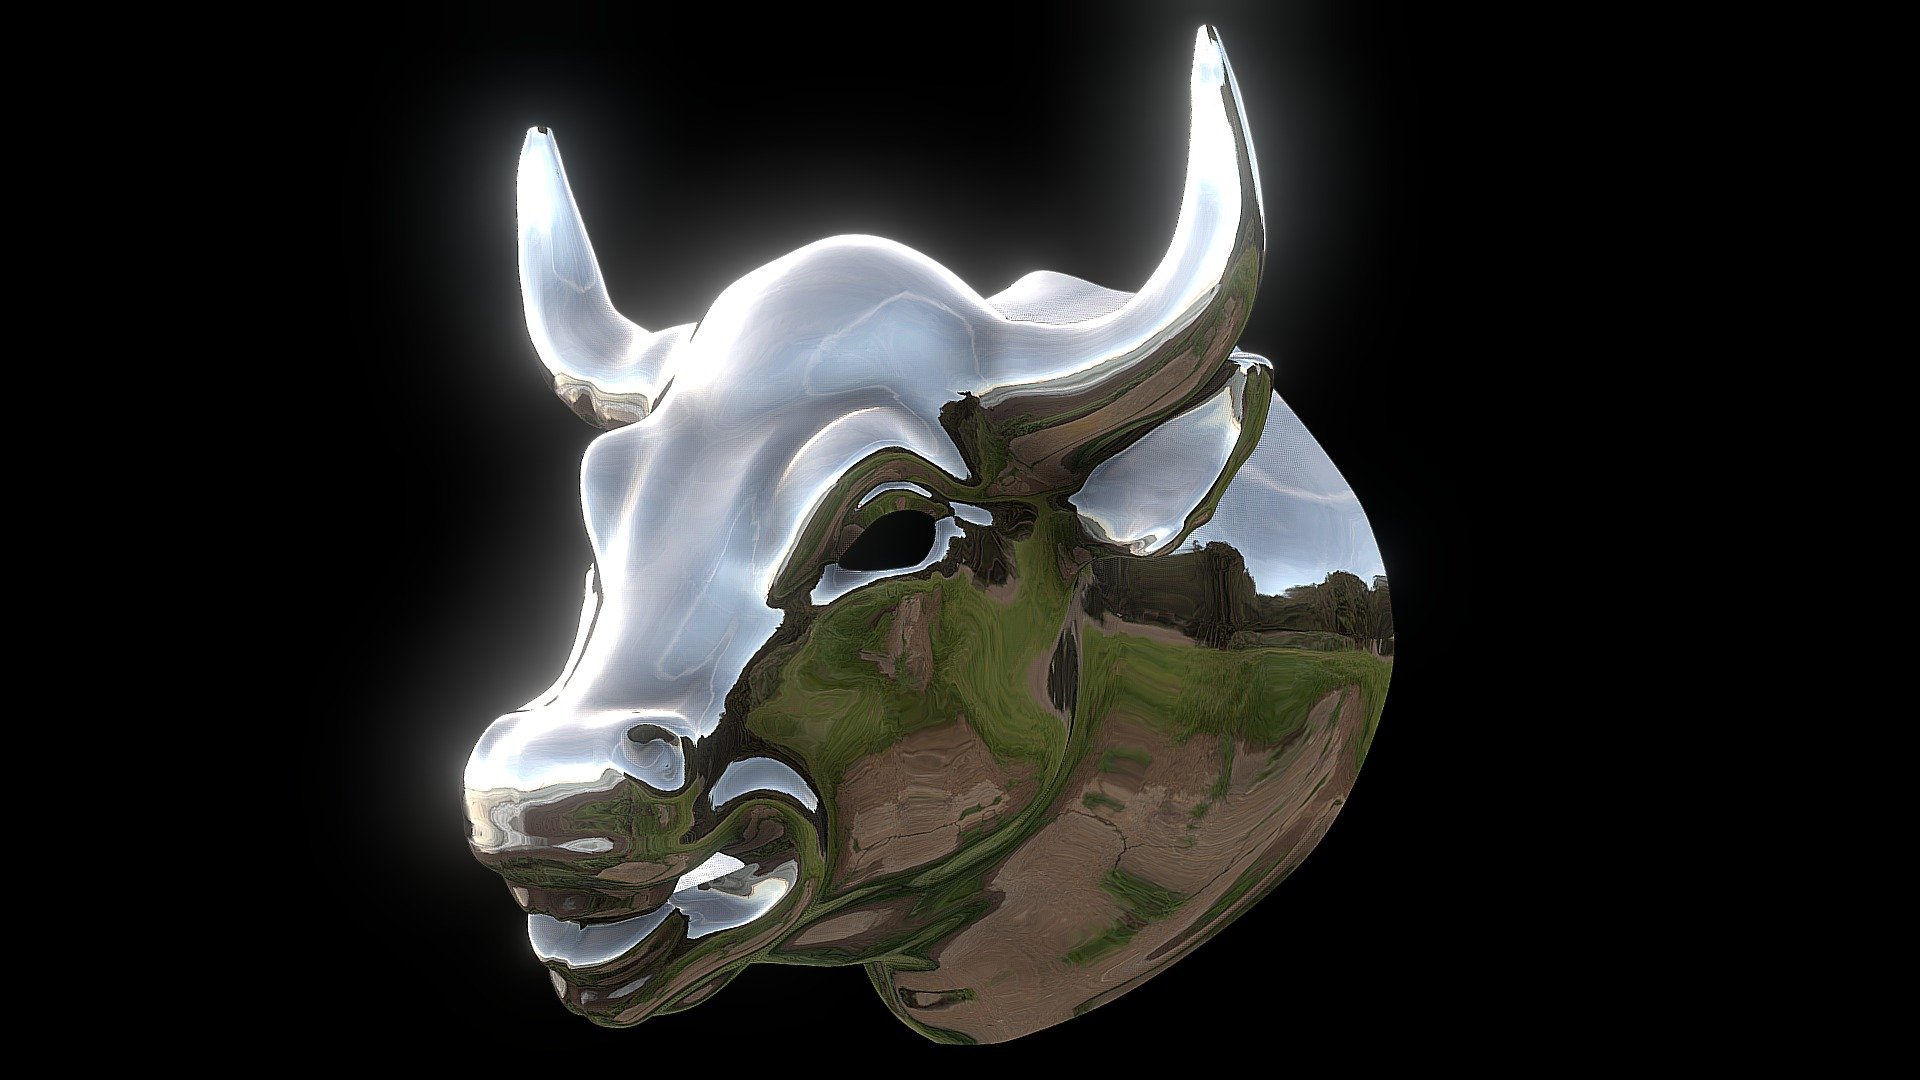 Bull 3d Model By 3dm Design 3dmdesign 9a9adce Sketchfab 7639